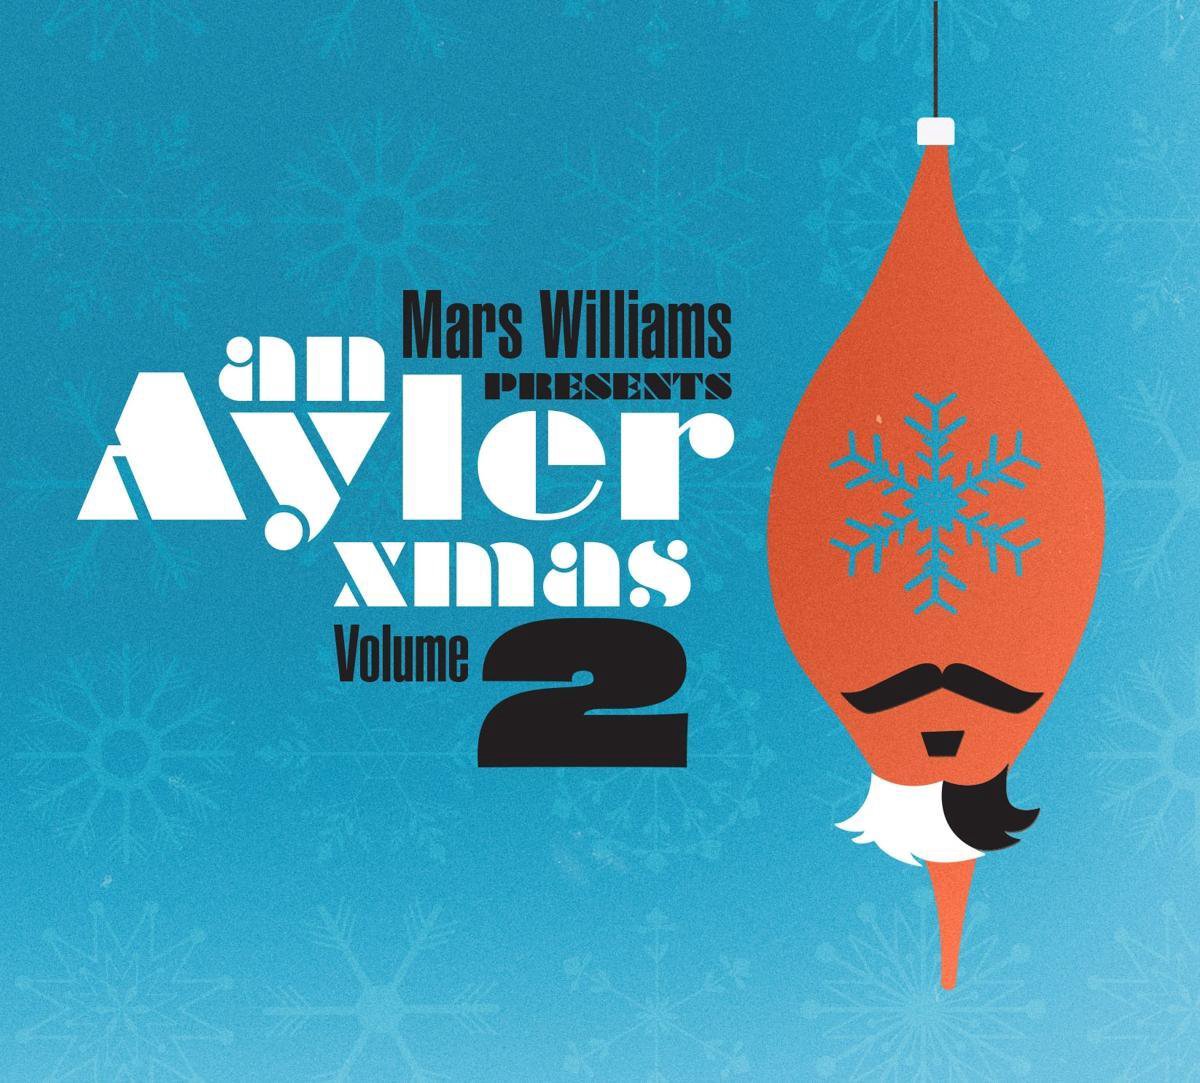 An Ayler Christmas - Mars Williams